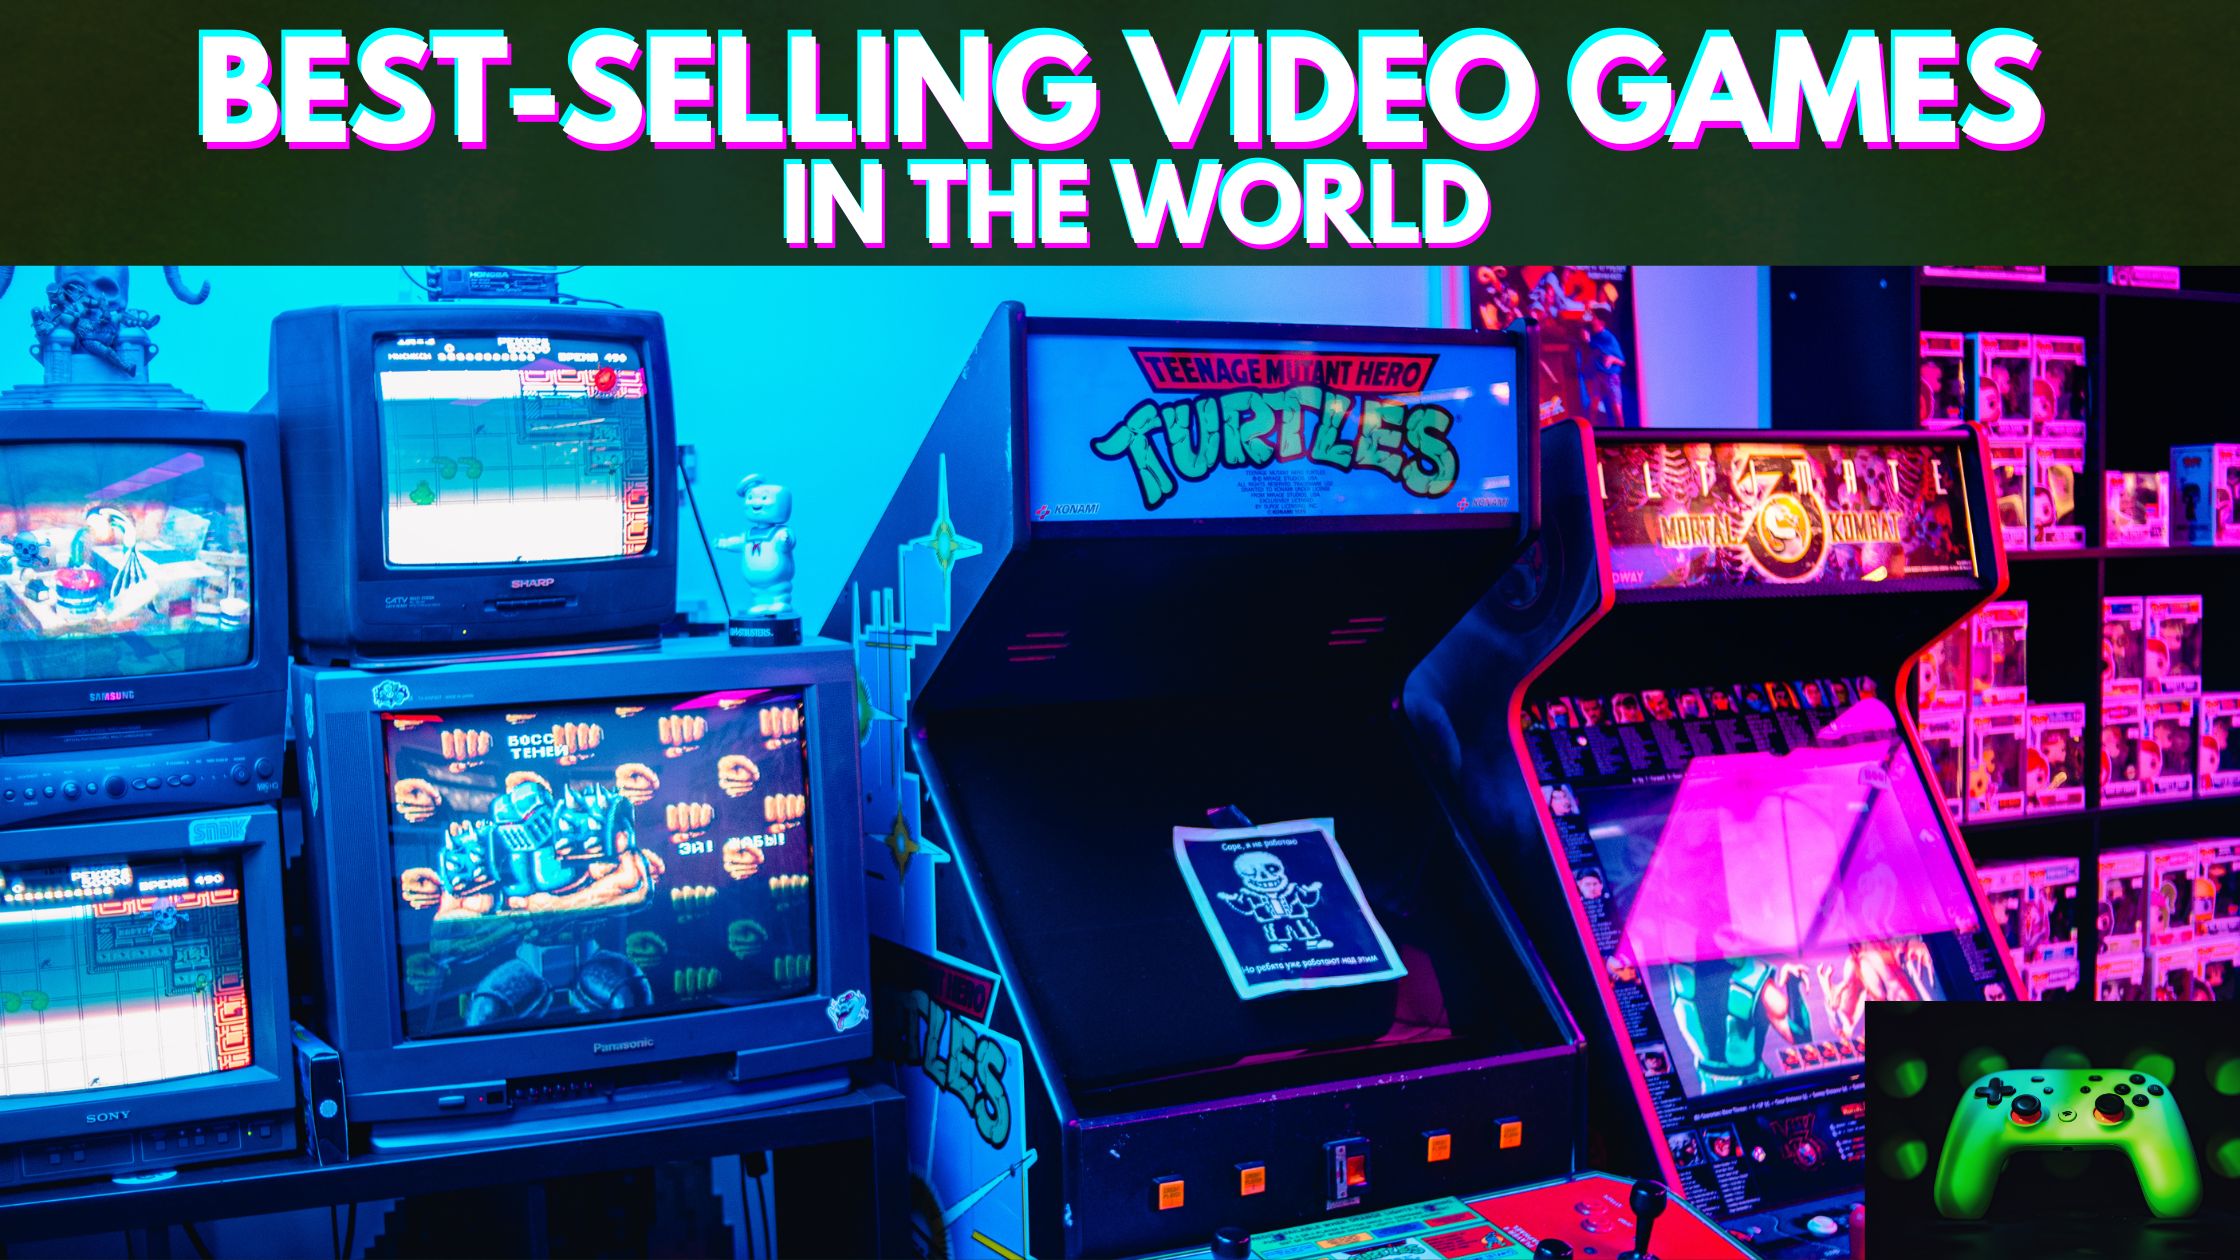 Best-selling Video Games